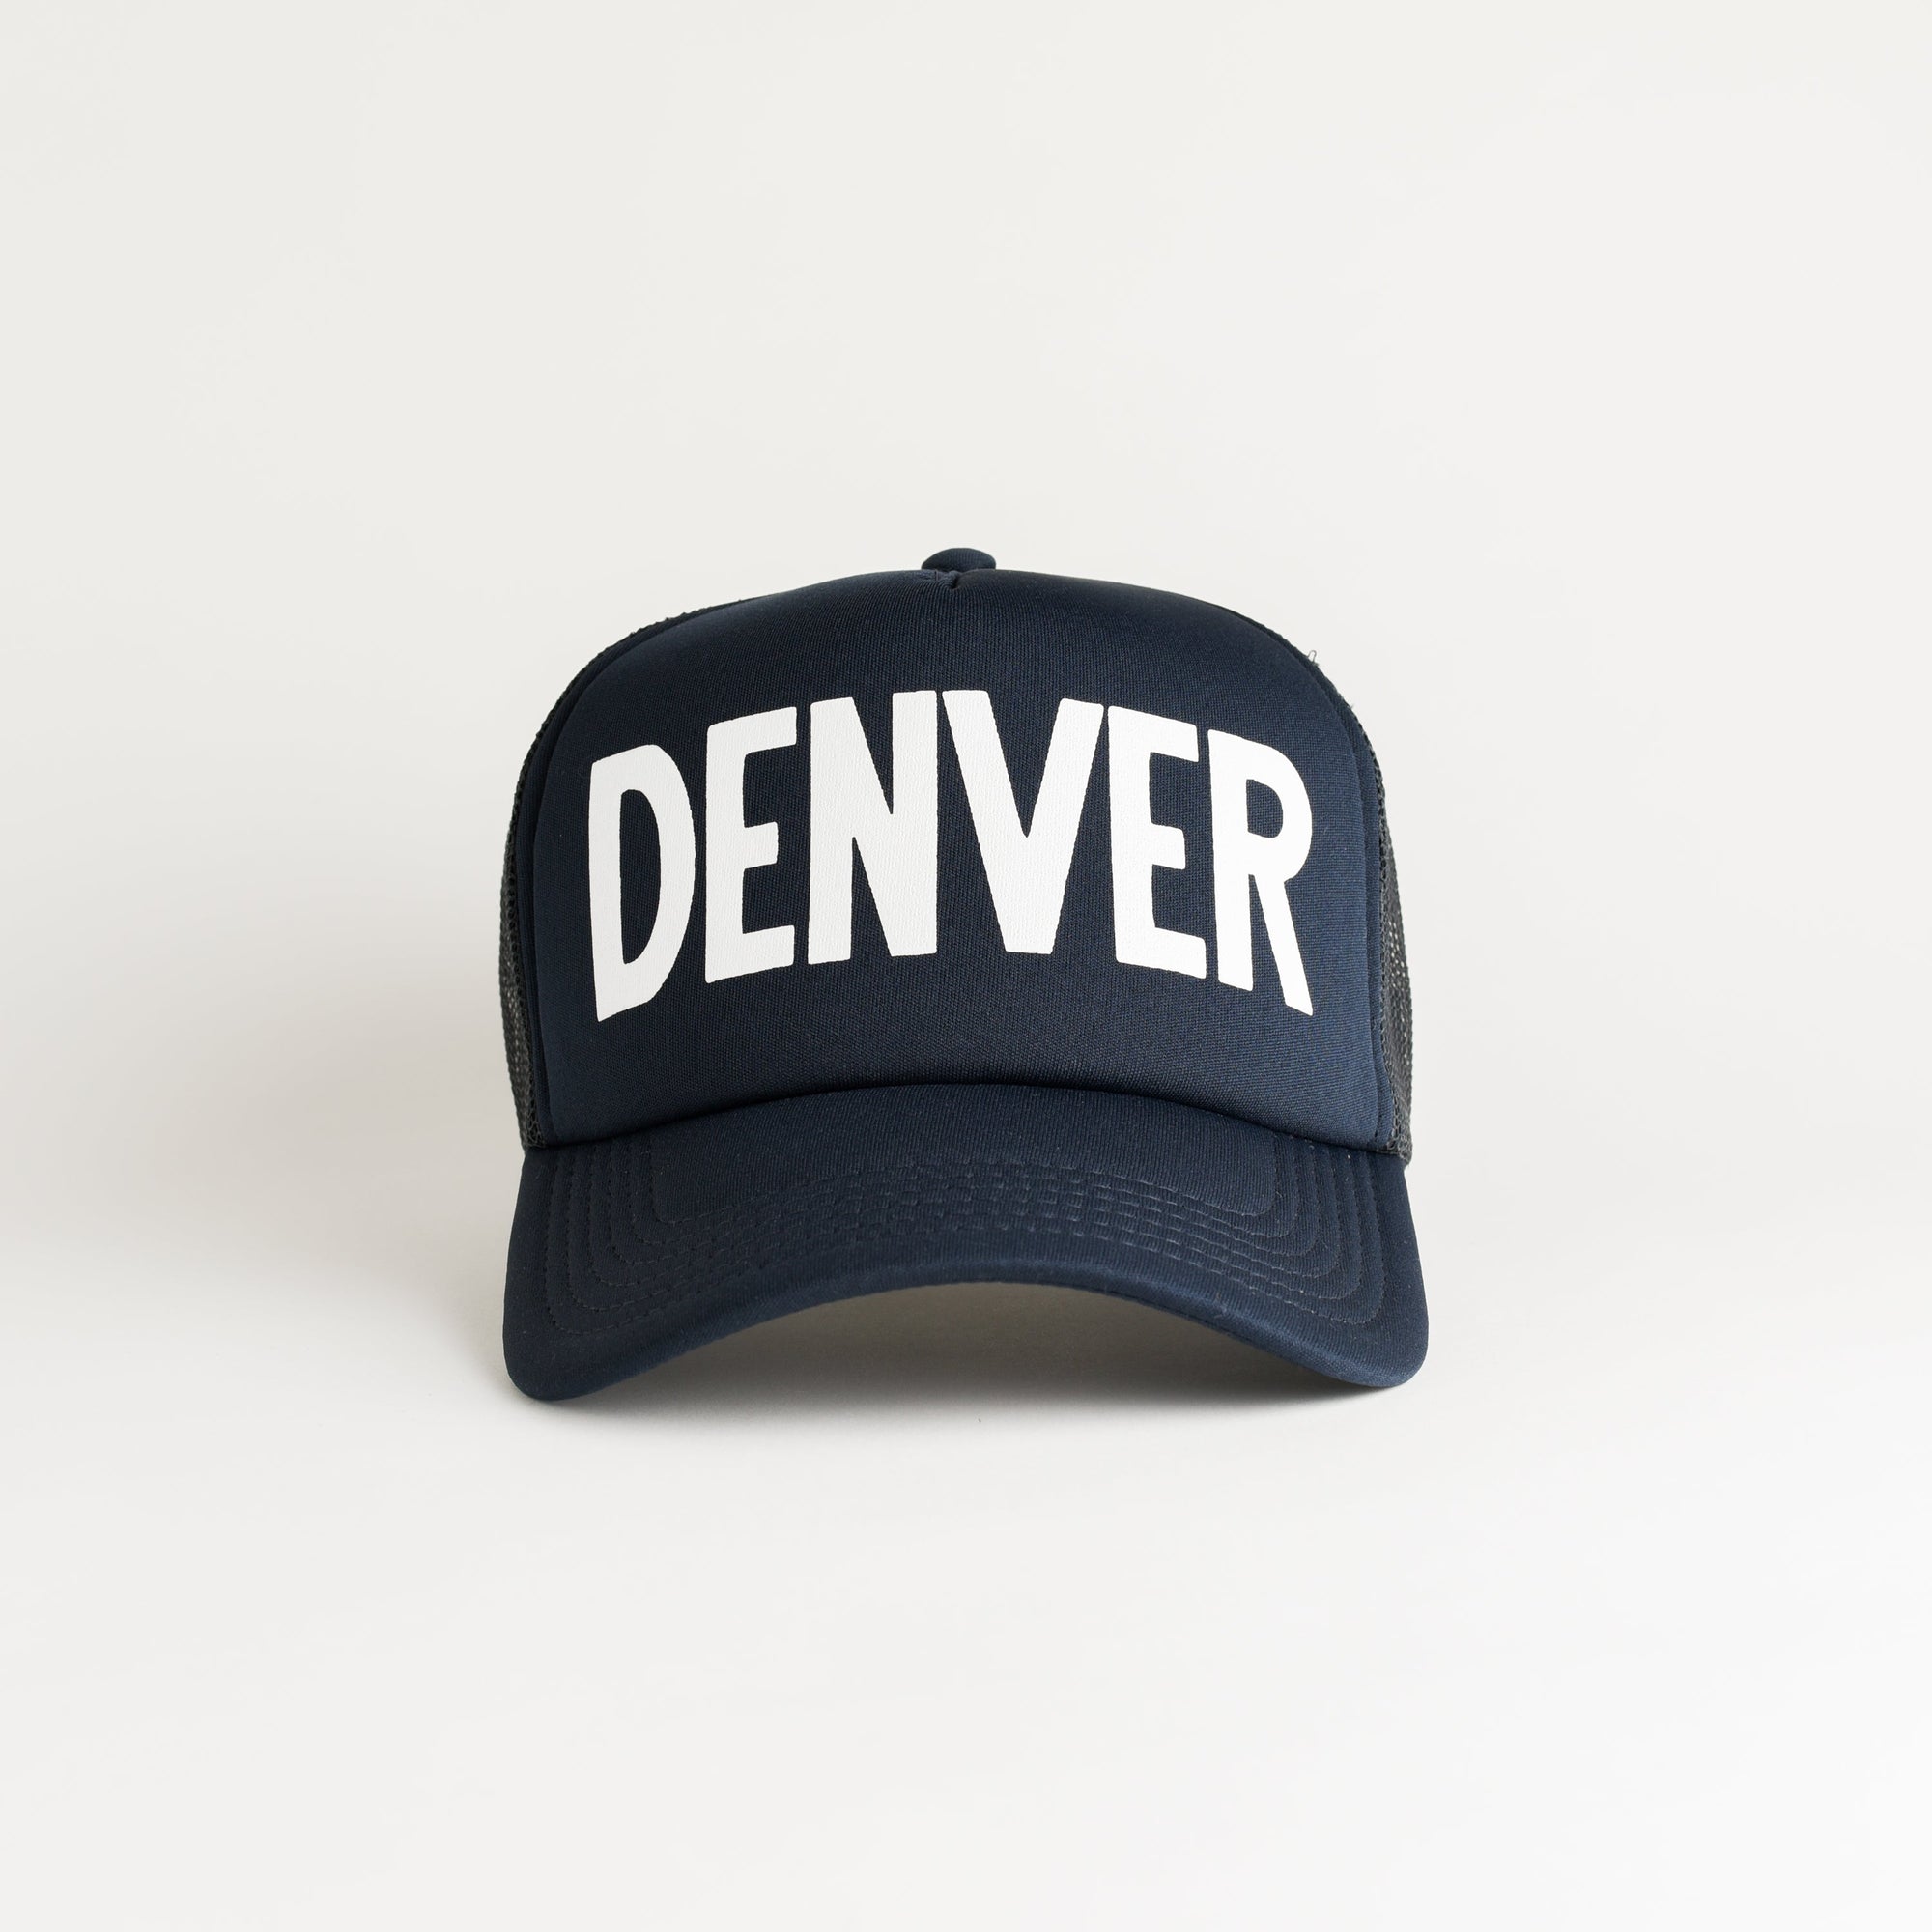 Denver Recycled Trucker Hat - navy